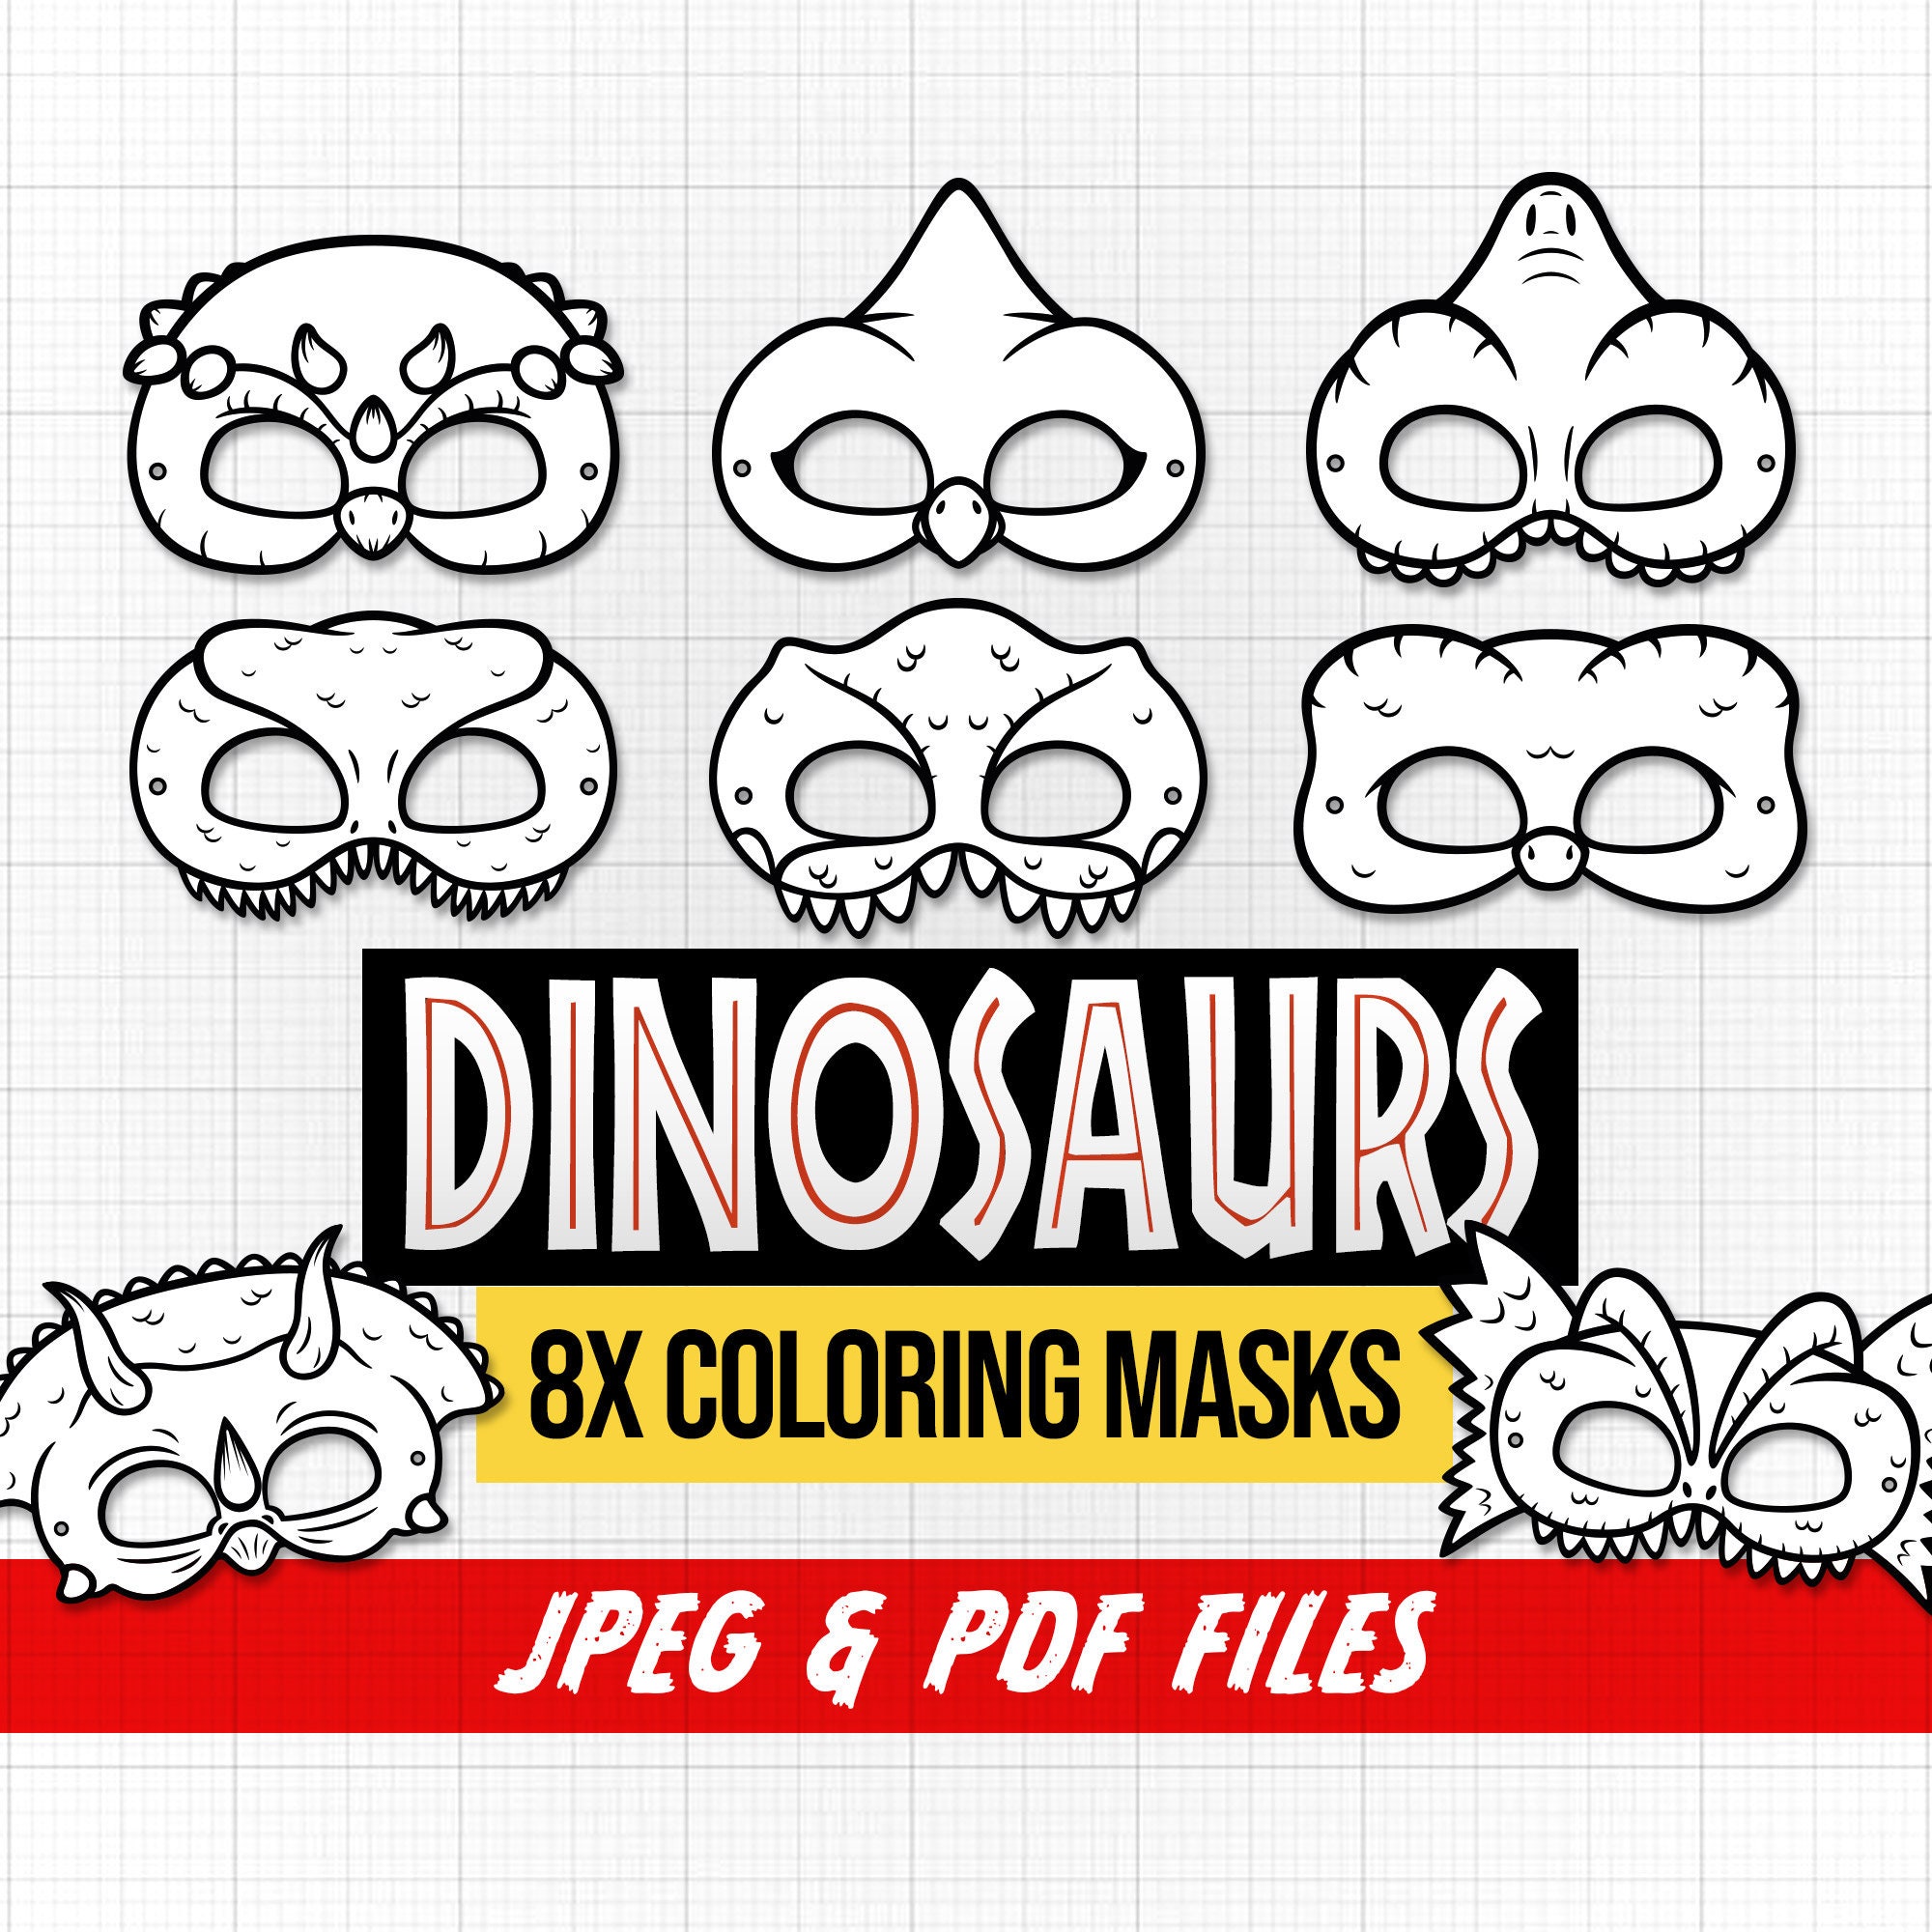 Dinosaur masks dinosaur printable coloring masks color your own masks dinosaur party dino dinosaur diy t